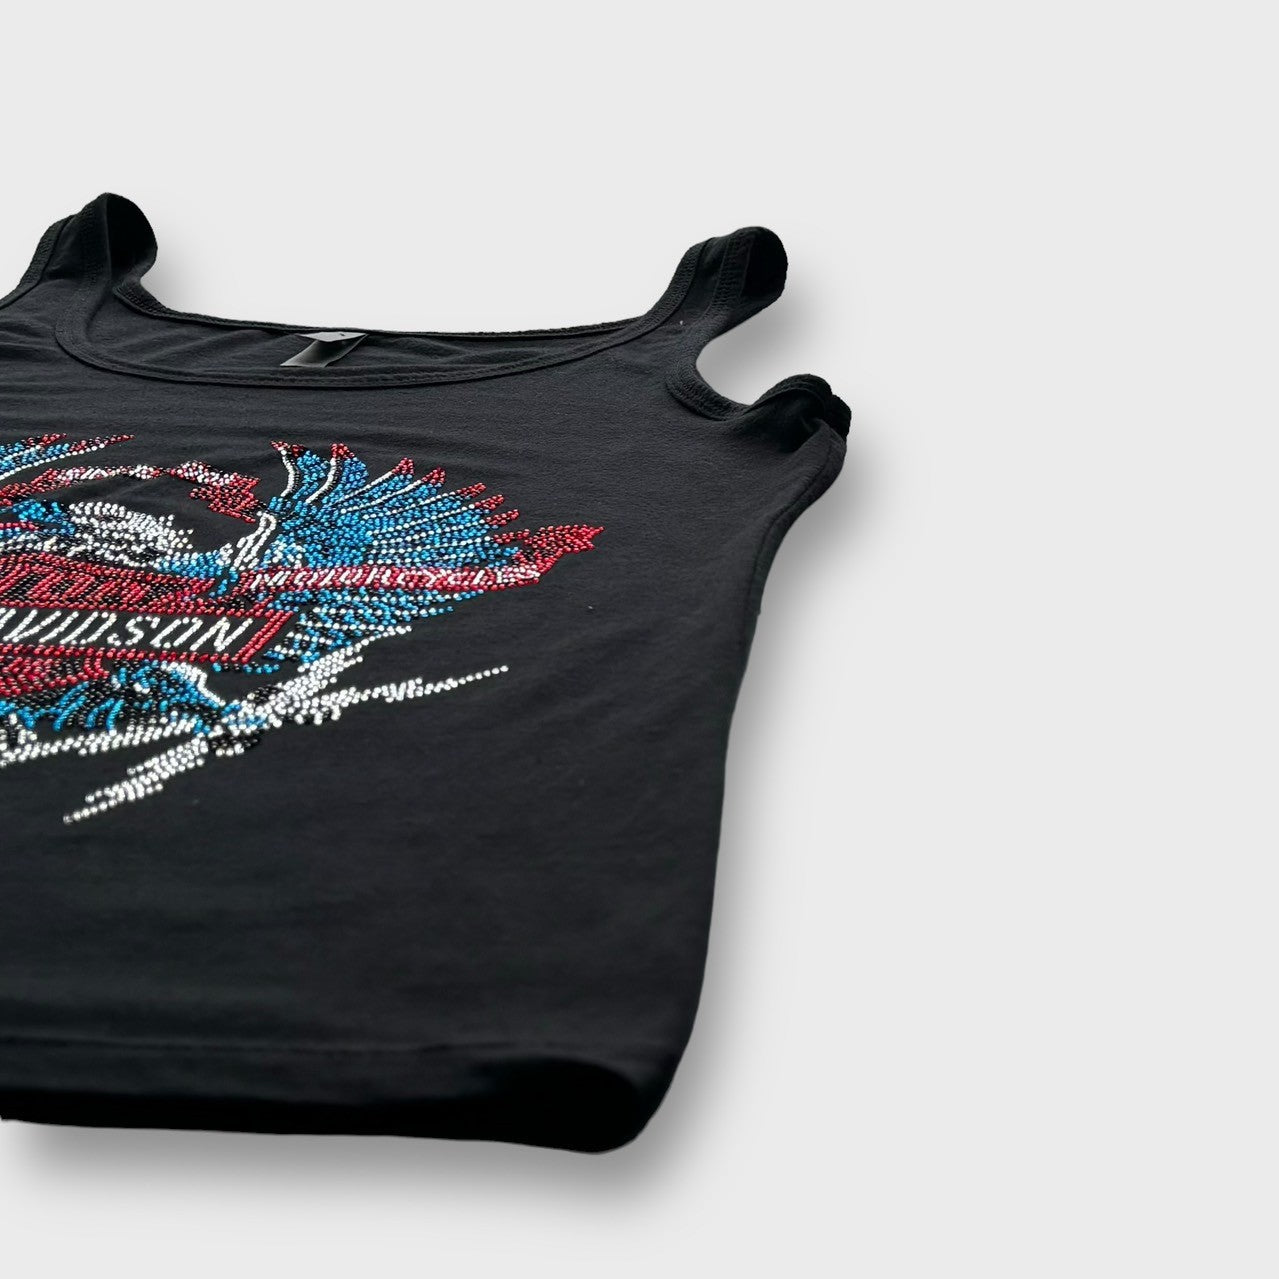 "Harley-Davidson" rhinestone design tank top